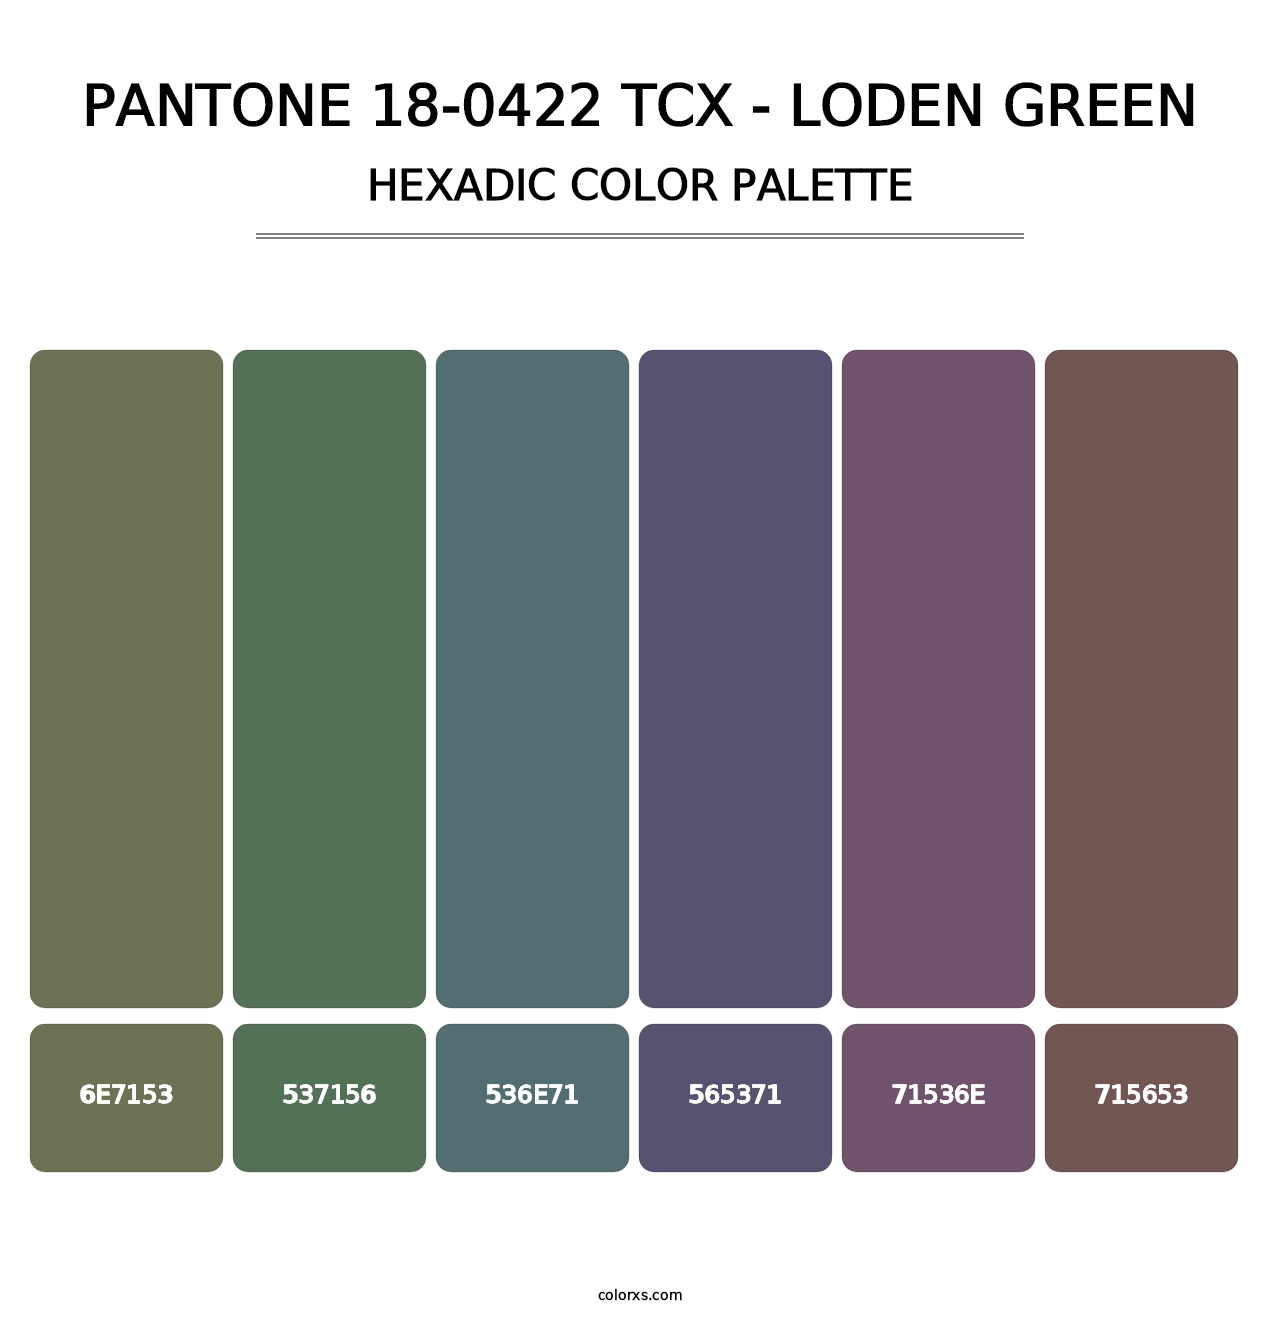 PANTONE 18-0422 TCX - Loden Green - Hexadic Color Palette